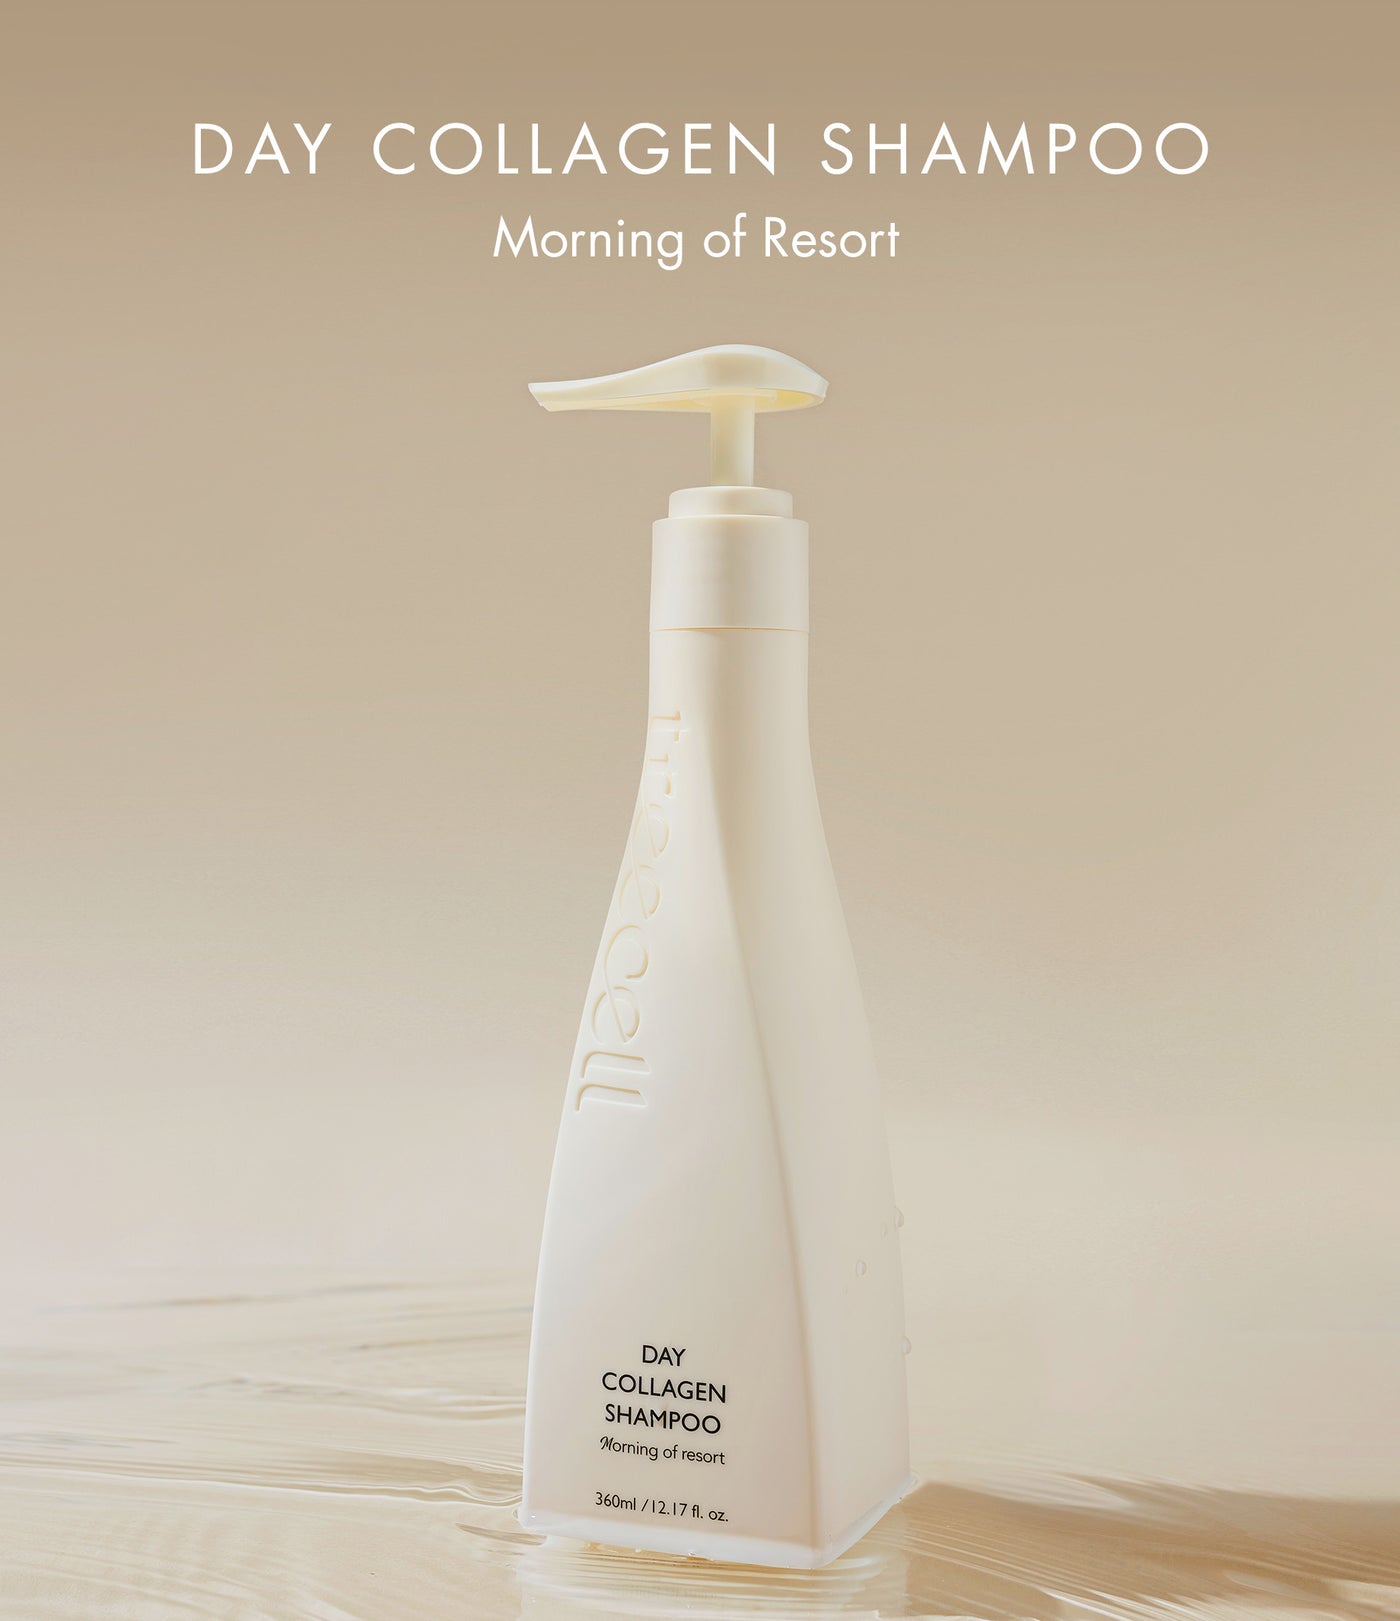 Treecell Day Collagen Shampoo Morning of Resort